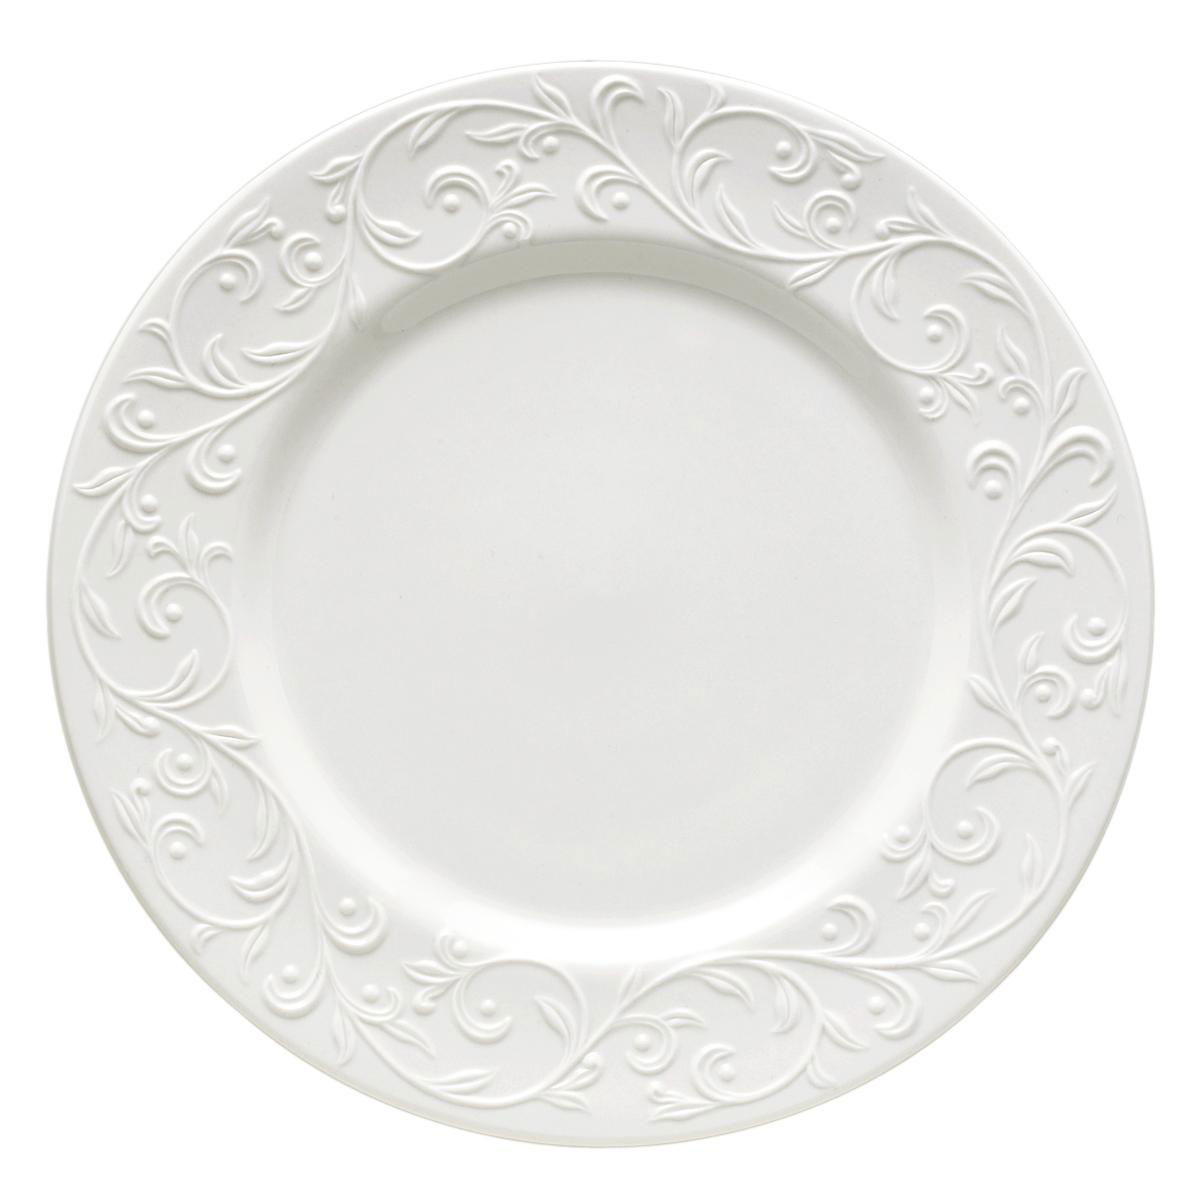 Lenox Opal Innocence Carved China Dinner Plate, Single